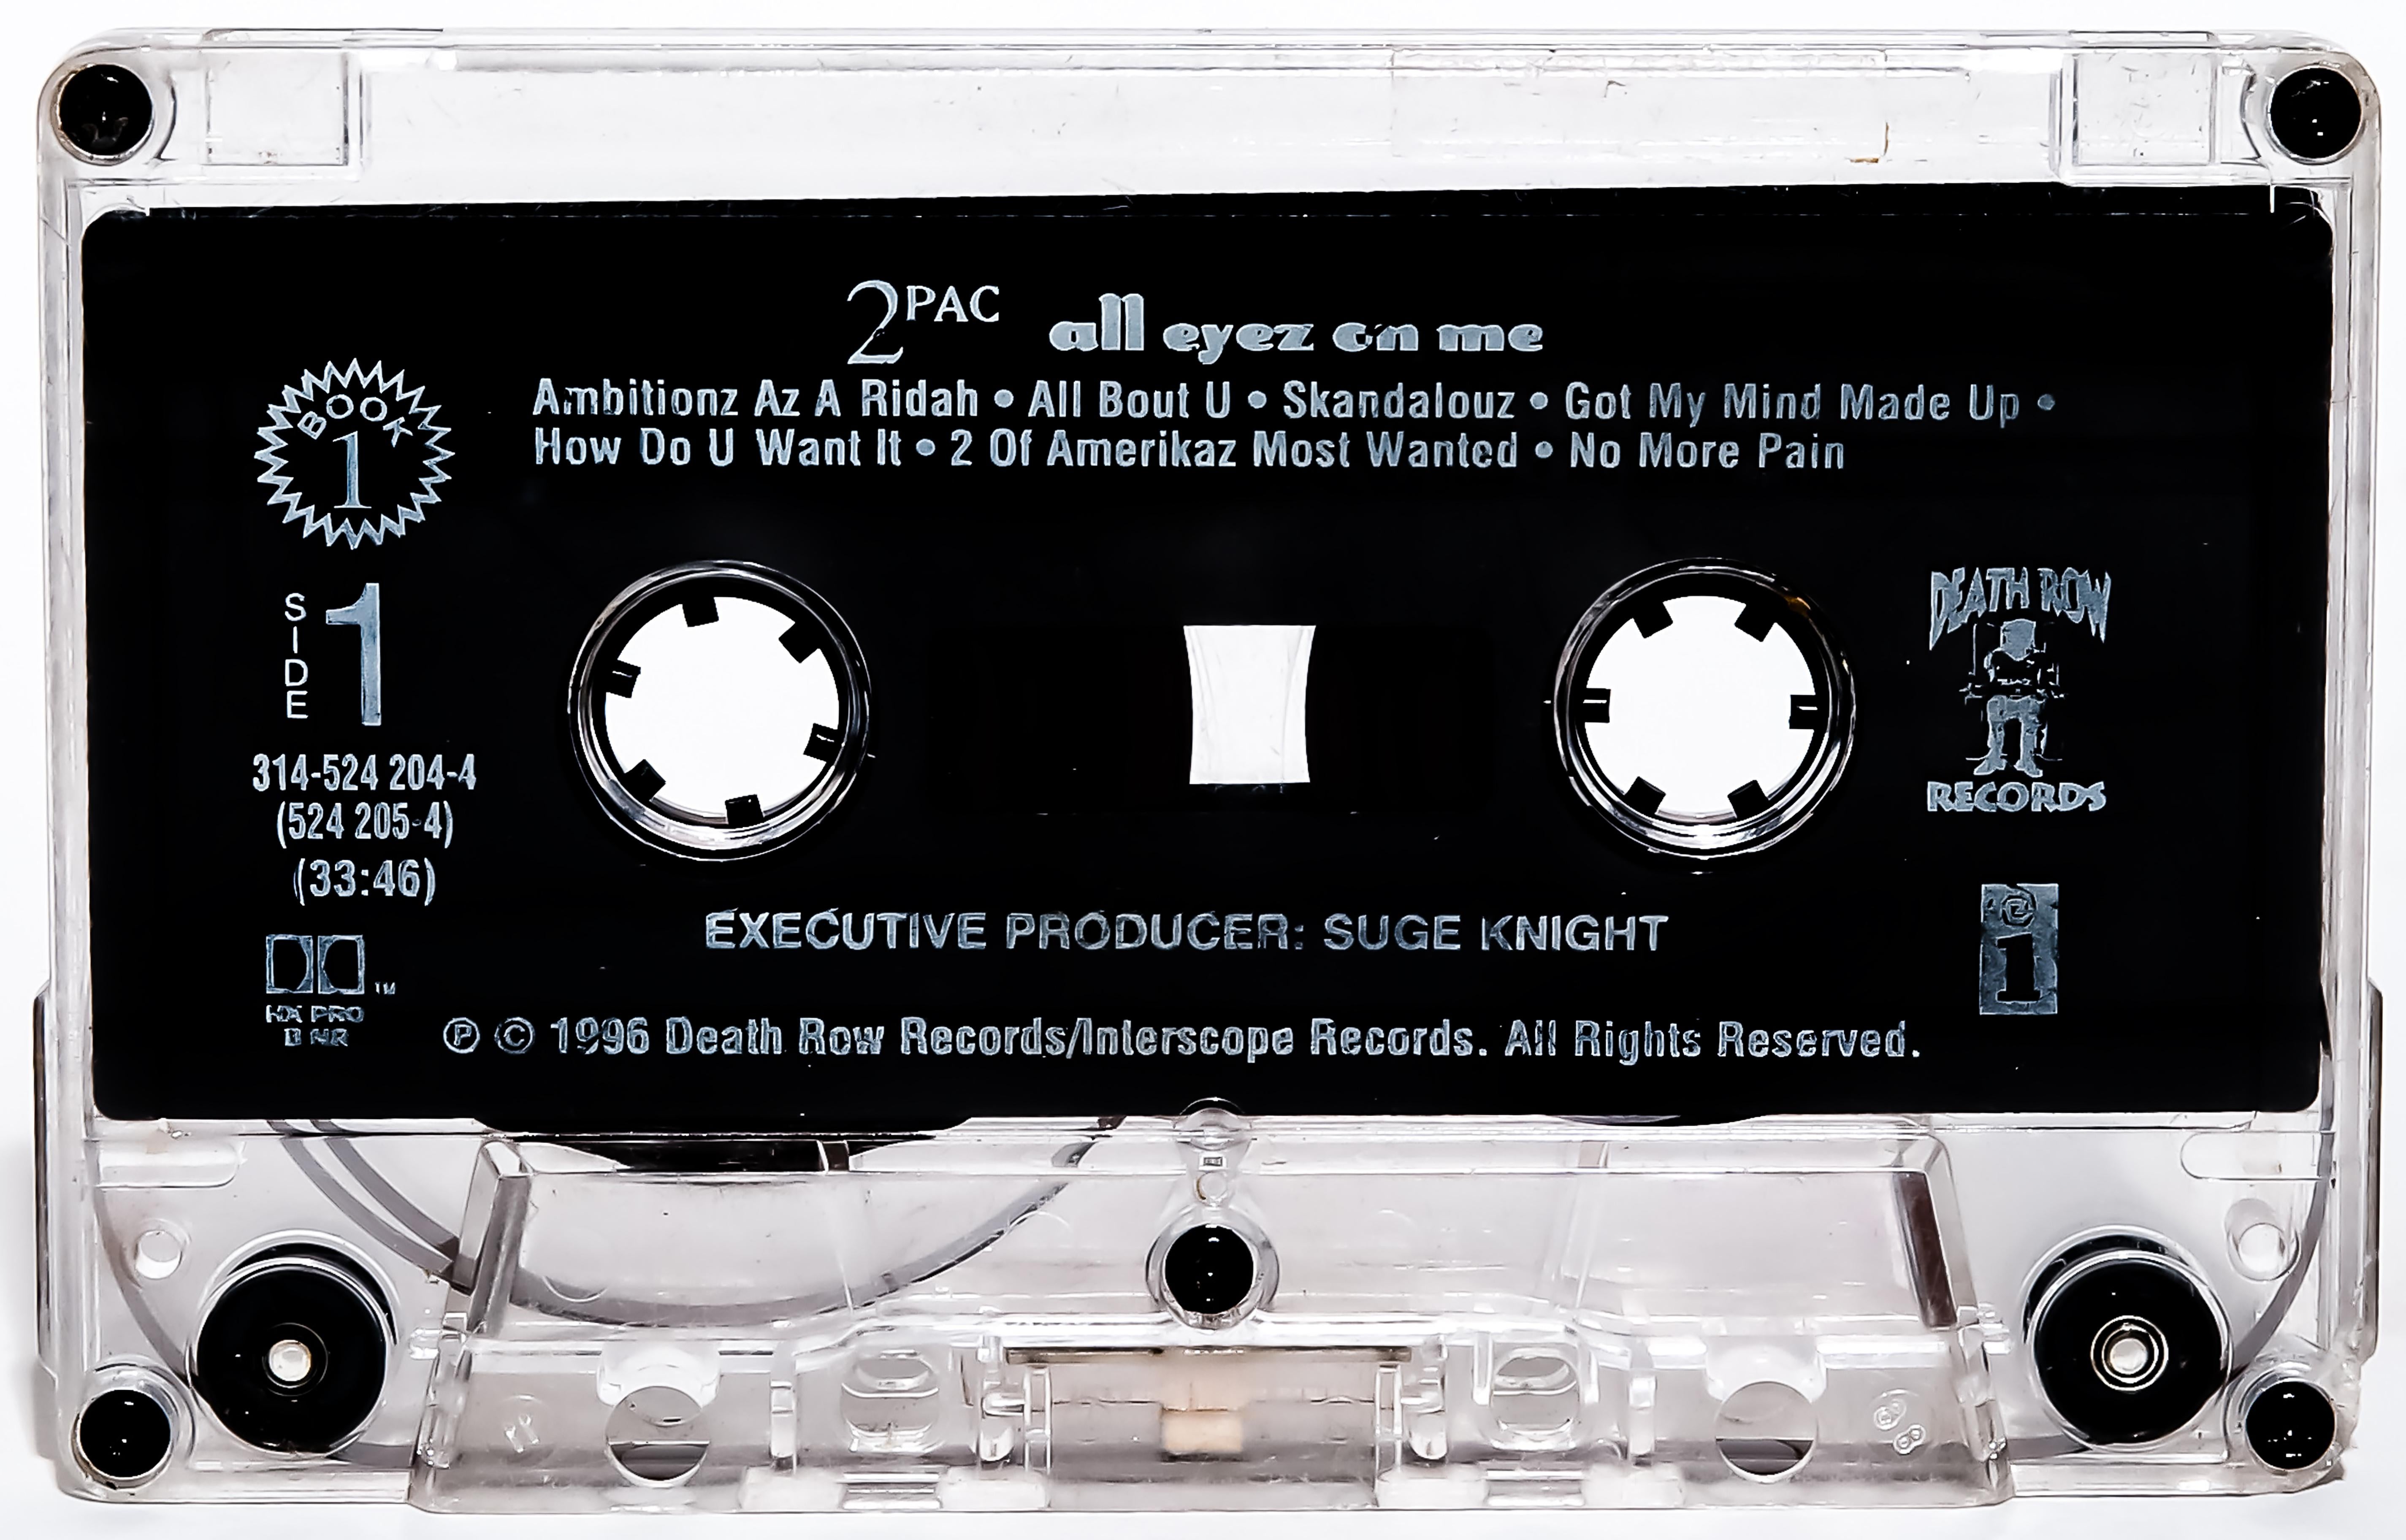 40x60 Tupac Shakur 2pac "All Eyez On Me" Cassette Photography  Pop Art by Destro